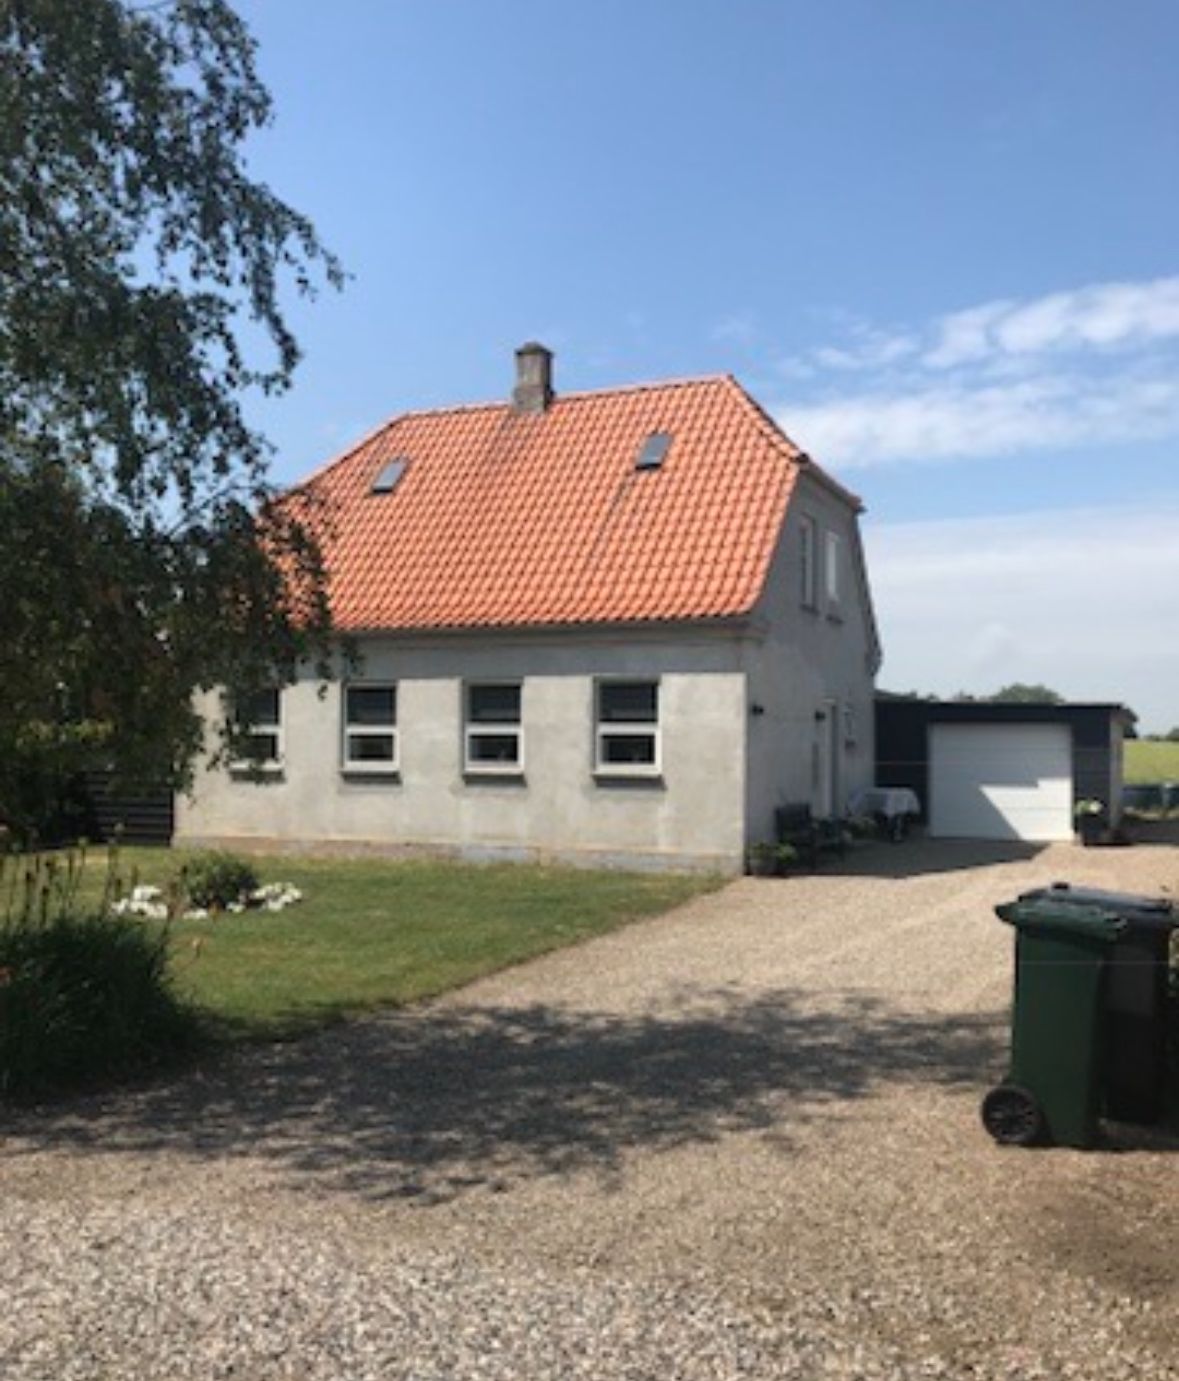 Hus/villa i Nysted 4880 på 130 kvm